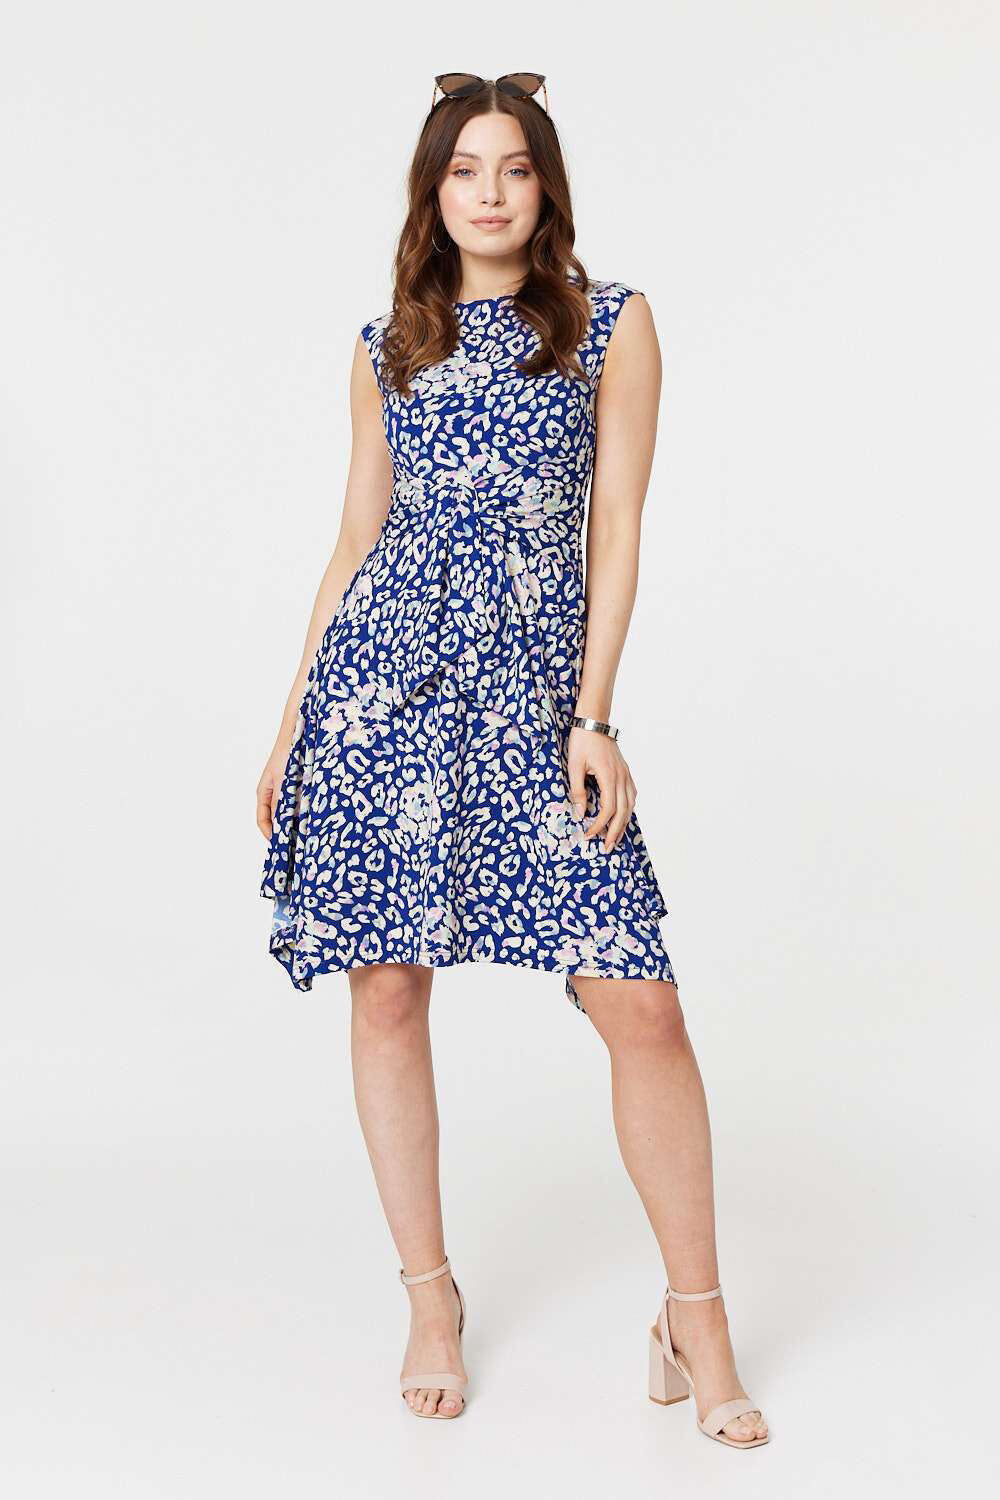 Izabel London Blue - Animal Print Sleeveless Short Dress, Size: 14